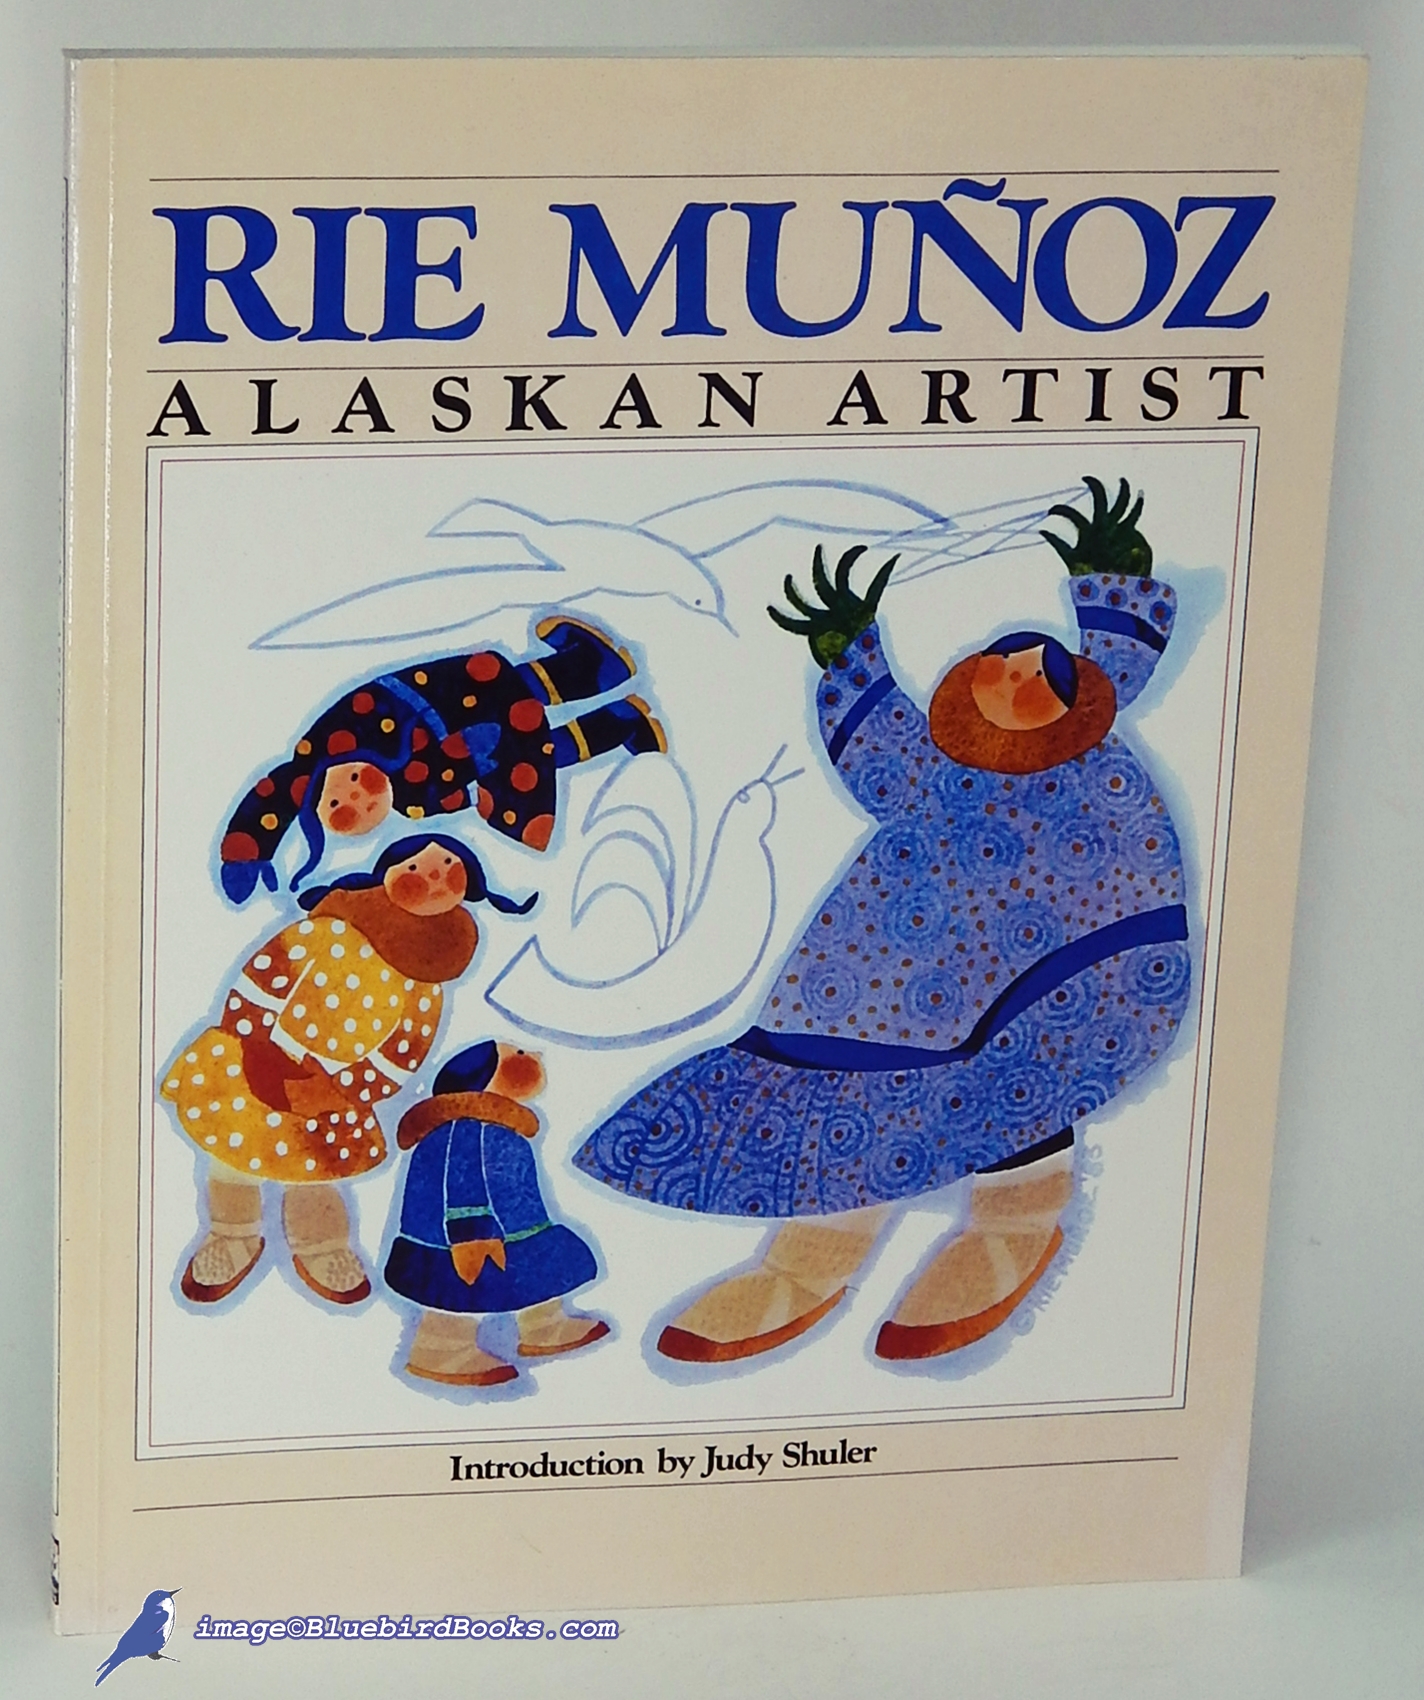 MUOZ, RIE; SHULER, JUDY (INTRODUCTION) - Rie Muoz: Alaskan Artist